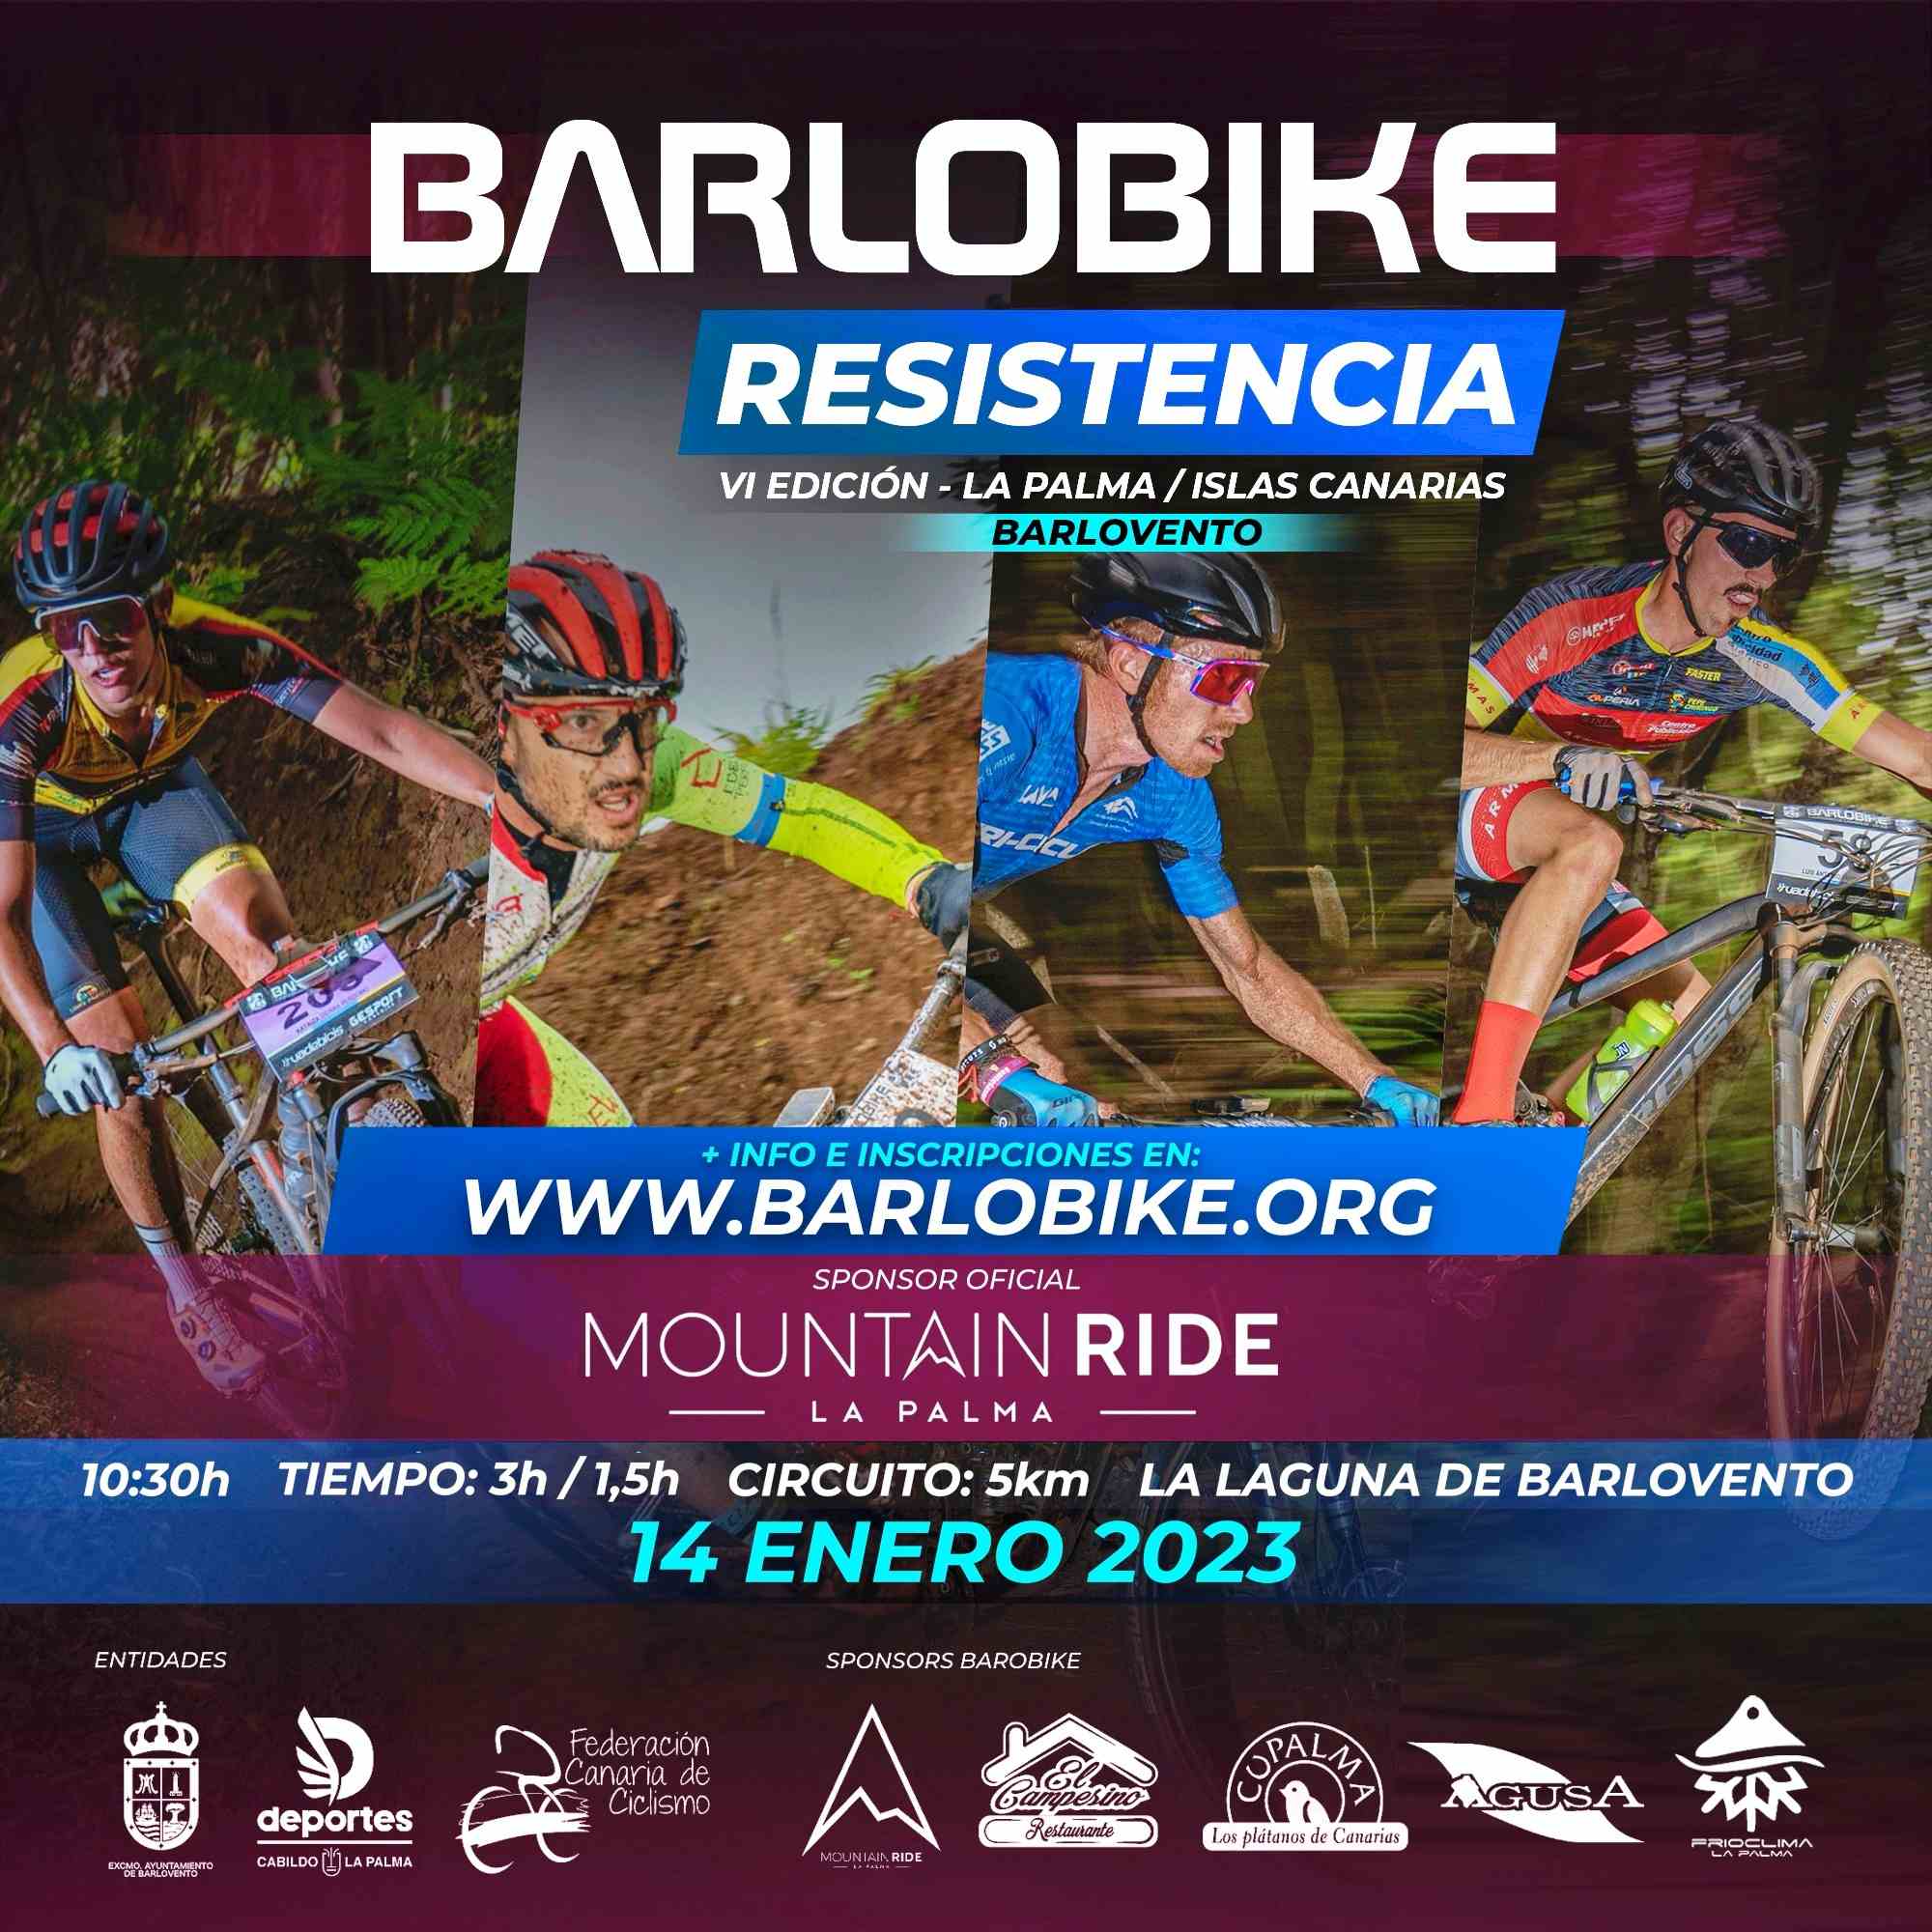 BARLOBIKE XC0 RESISTENCIA 2023 - Inskriba zaitez